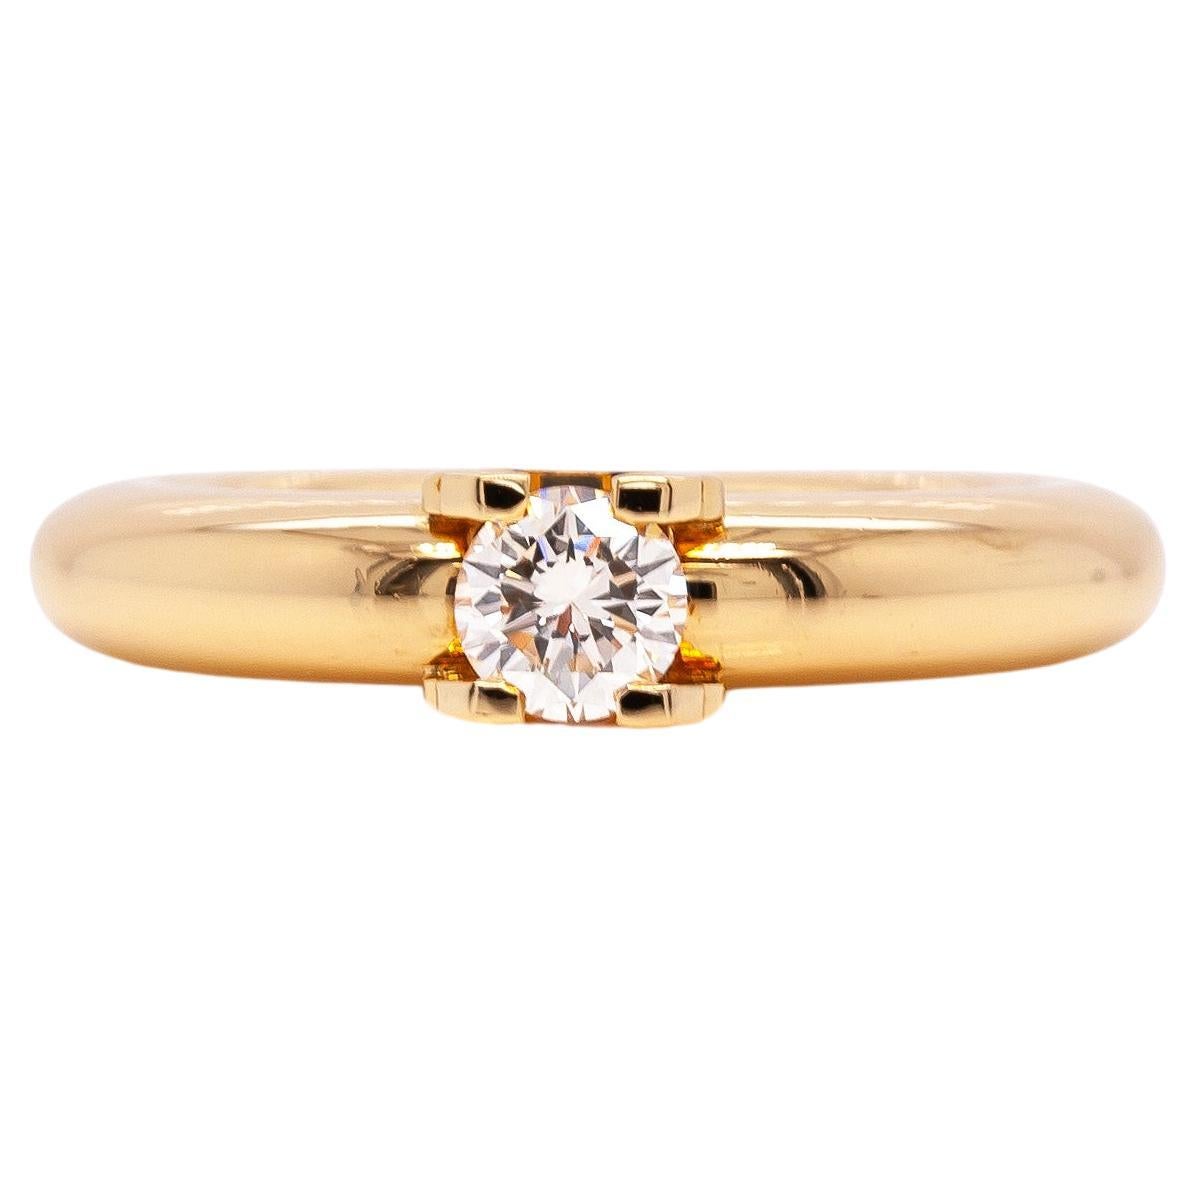 Cartier 'C de Cartier' 18 Carat Yellow Gold Diamond Solitaire Engagement Ring